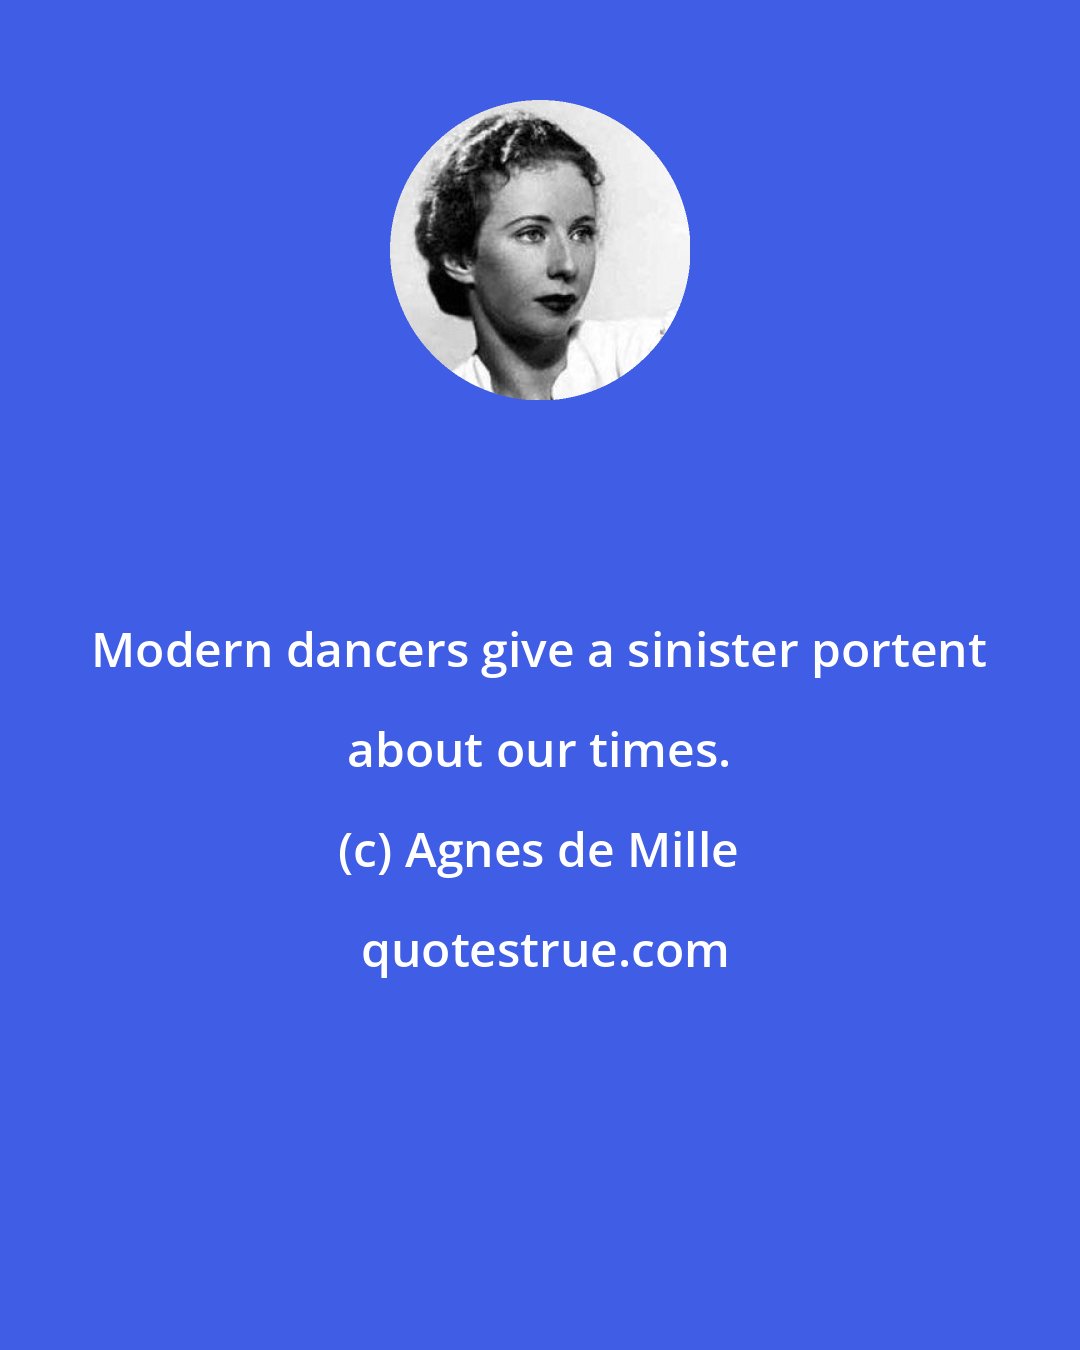 Agnes de Mille: Modern dancers give a sinister portent about our times.